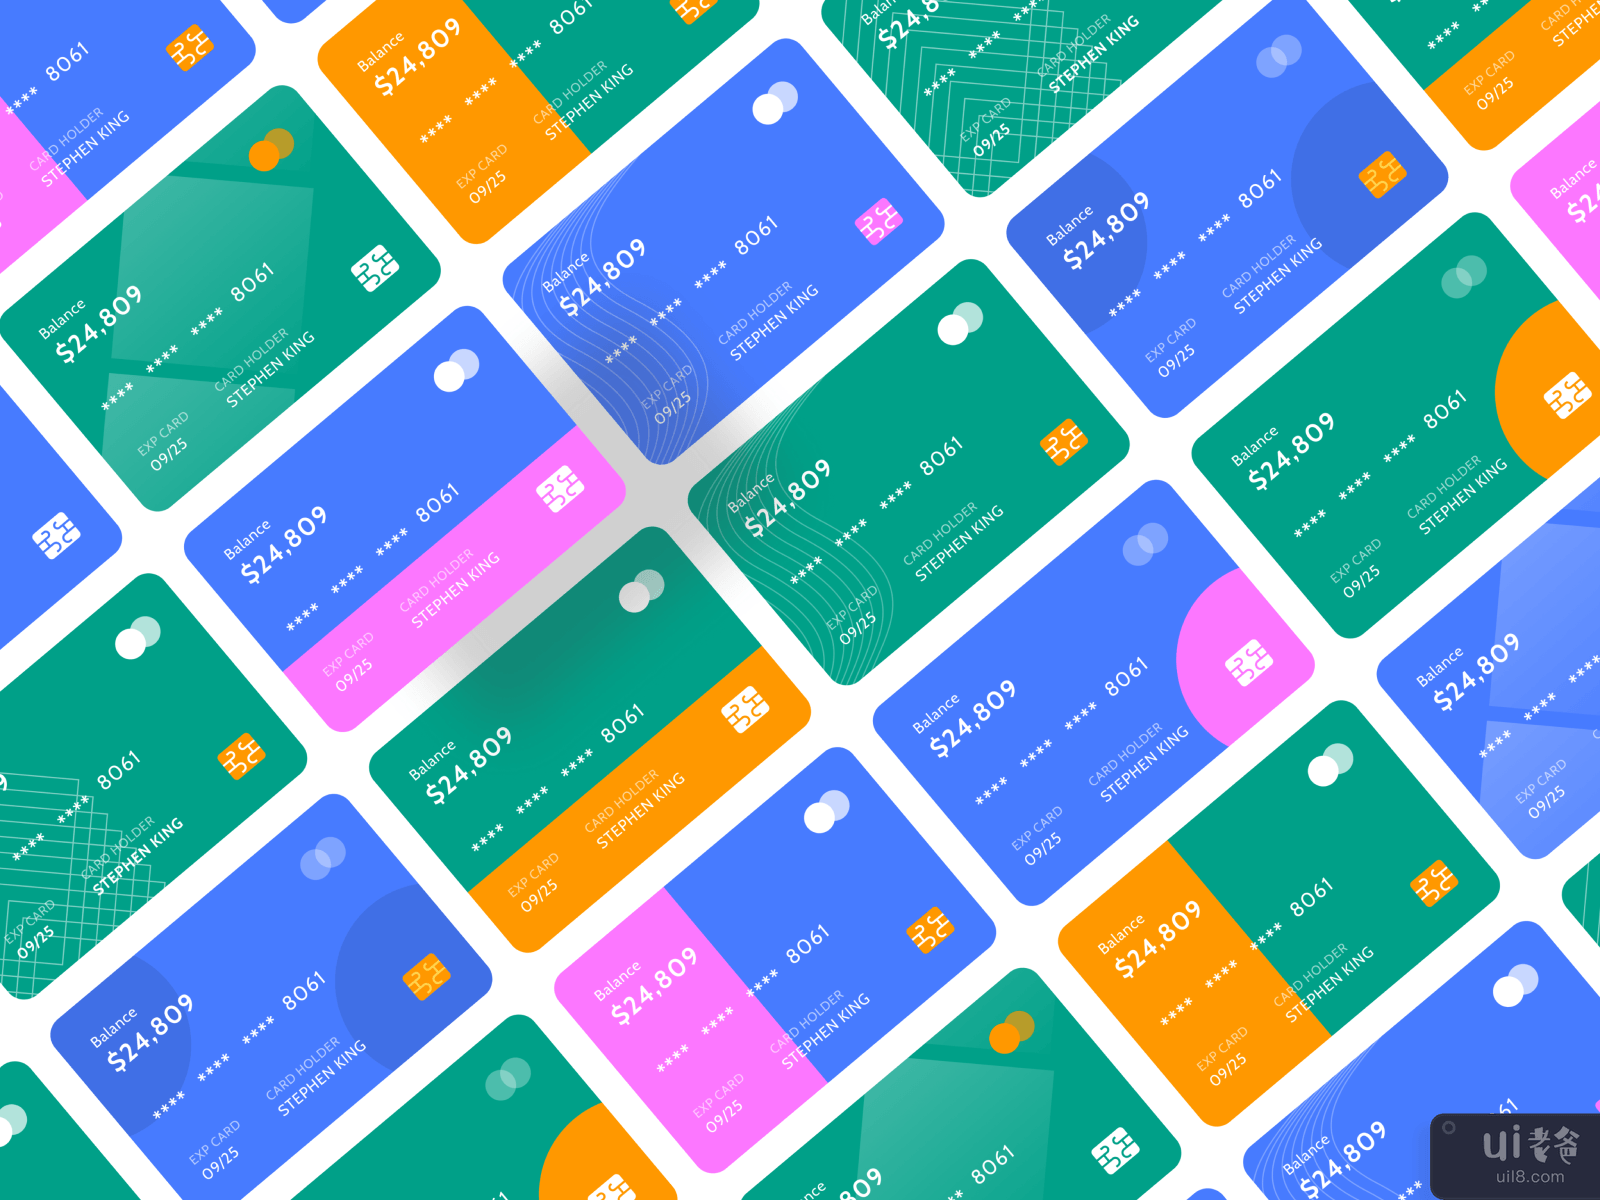 Bank Card - Credit Card Design